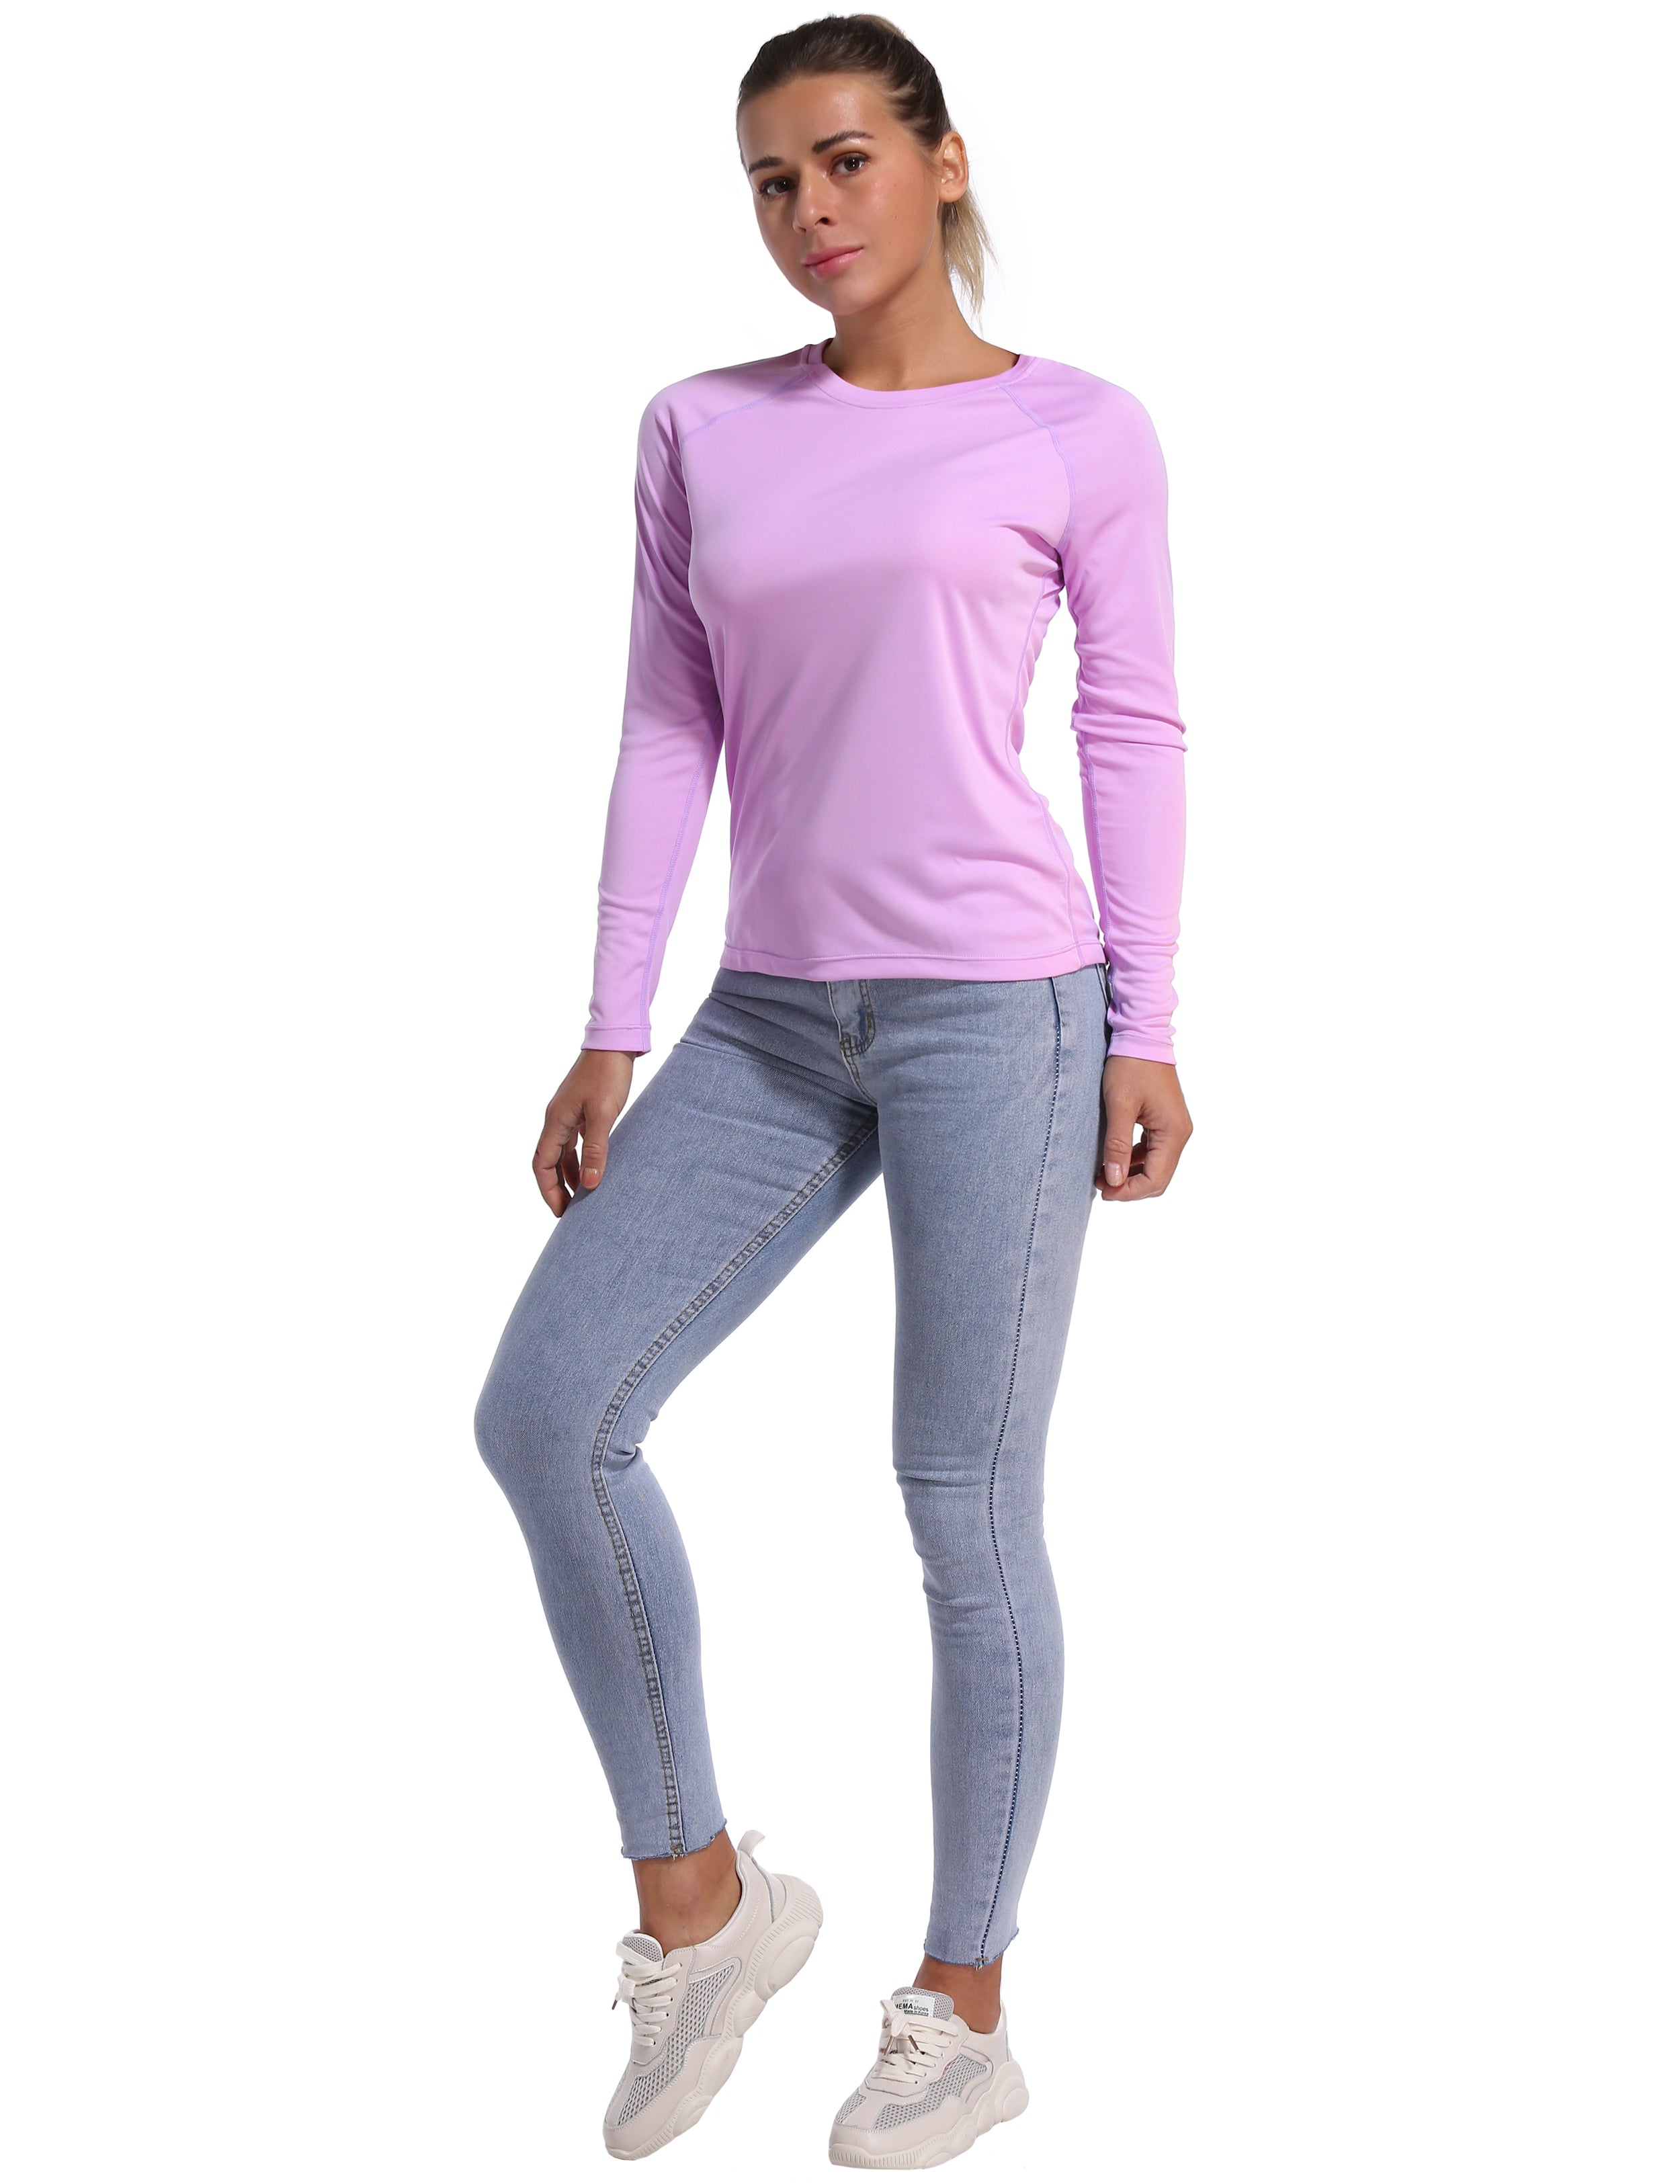 Long Sleeve Athletic Shirts purple 100% polyester Lightweight Slim Fit UPF 50+ blocks sun's harmful rays Treated to wick moisture, dries ultra-fast